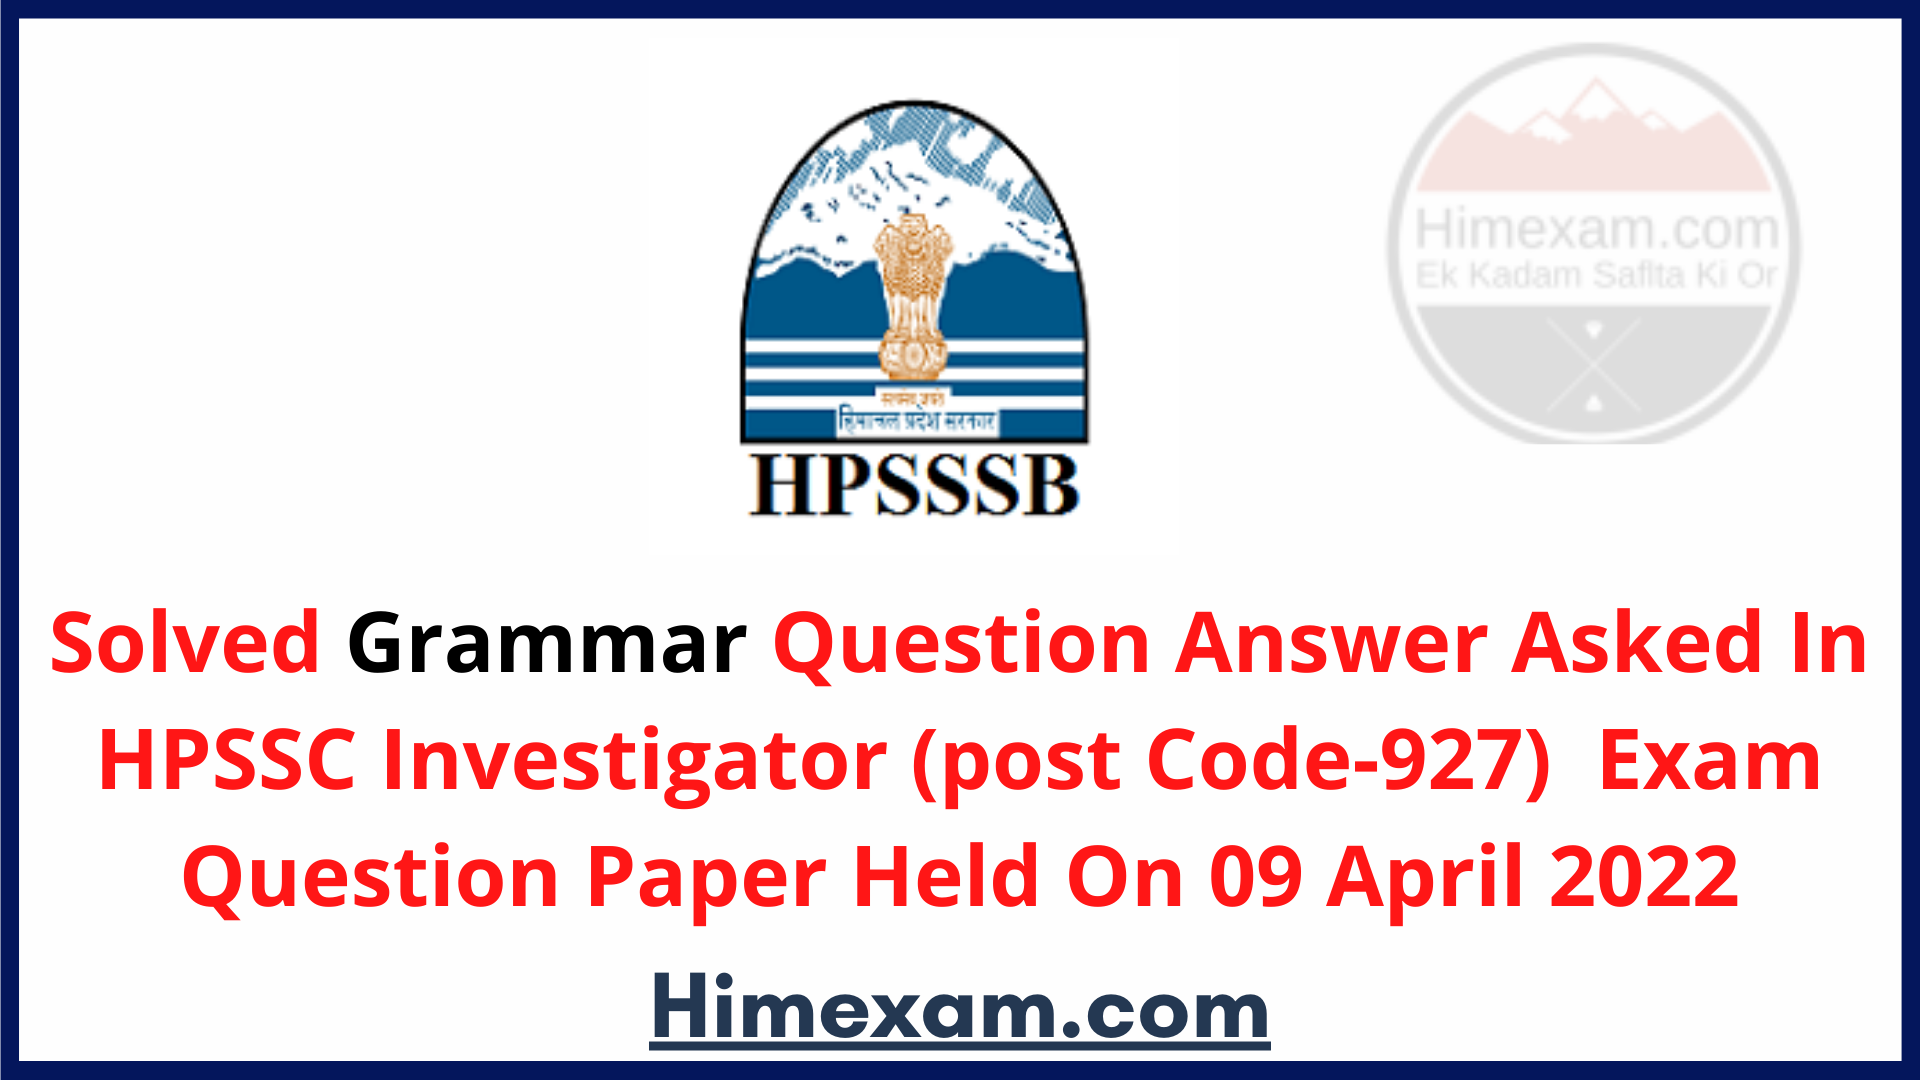 Solved Grammar Question Asked In HPSSC Investigator (post Code-927)  Exam 2022